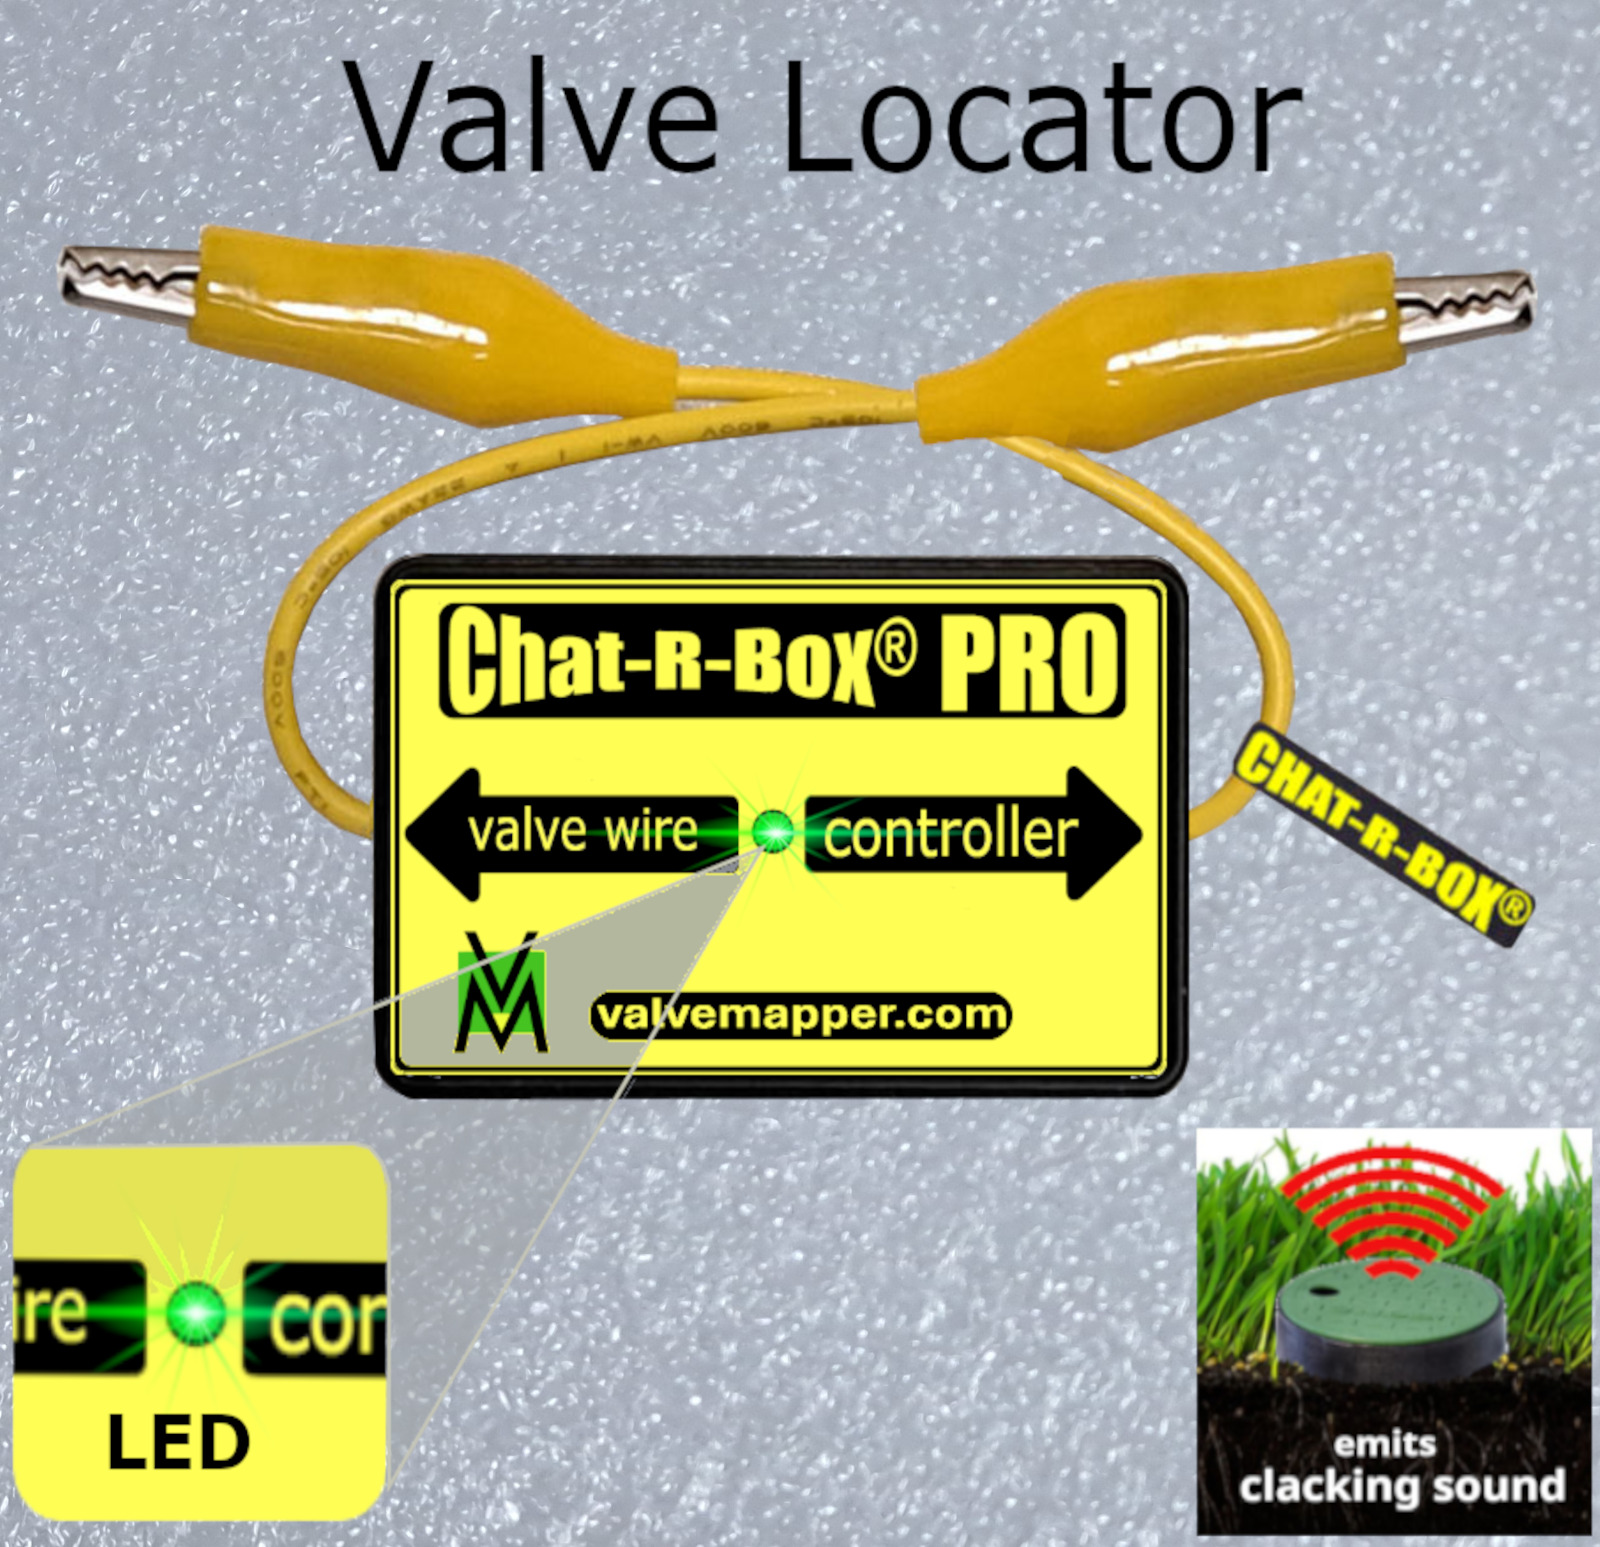 ✅Lawn Valve Locator Chat-R-Box® Pro w/LED, Valve Finder, find lost valves